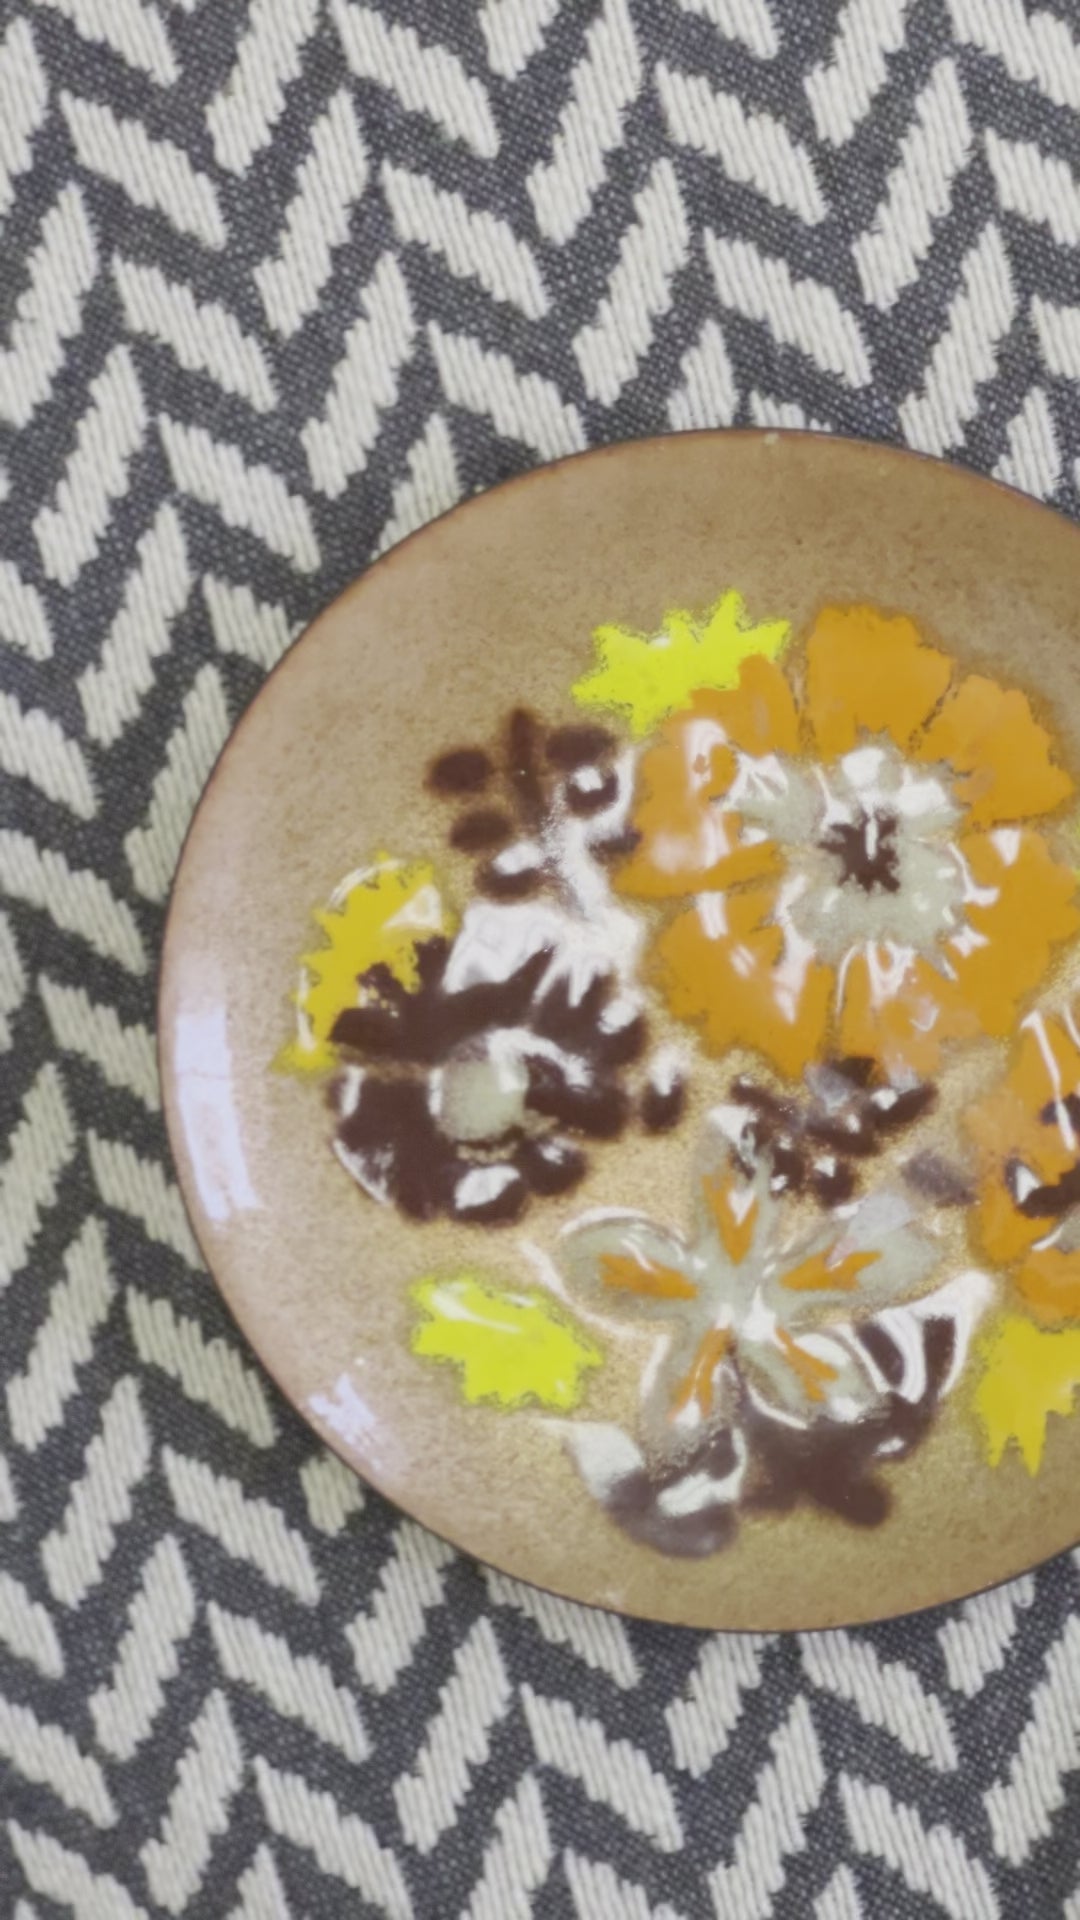 “Annmarie Davidson” Copper Floral Petrie Dish (Pair)